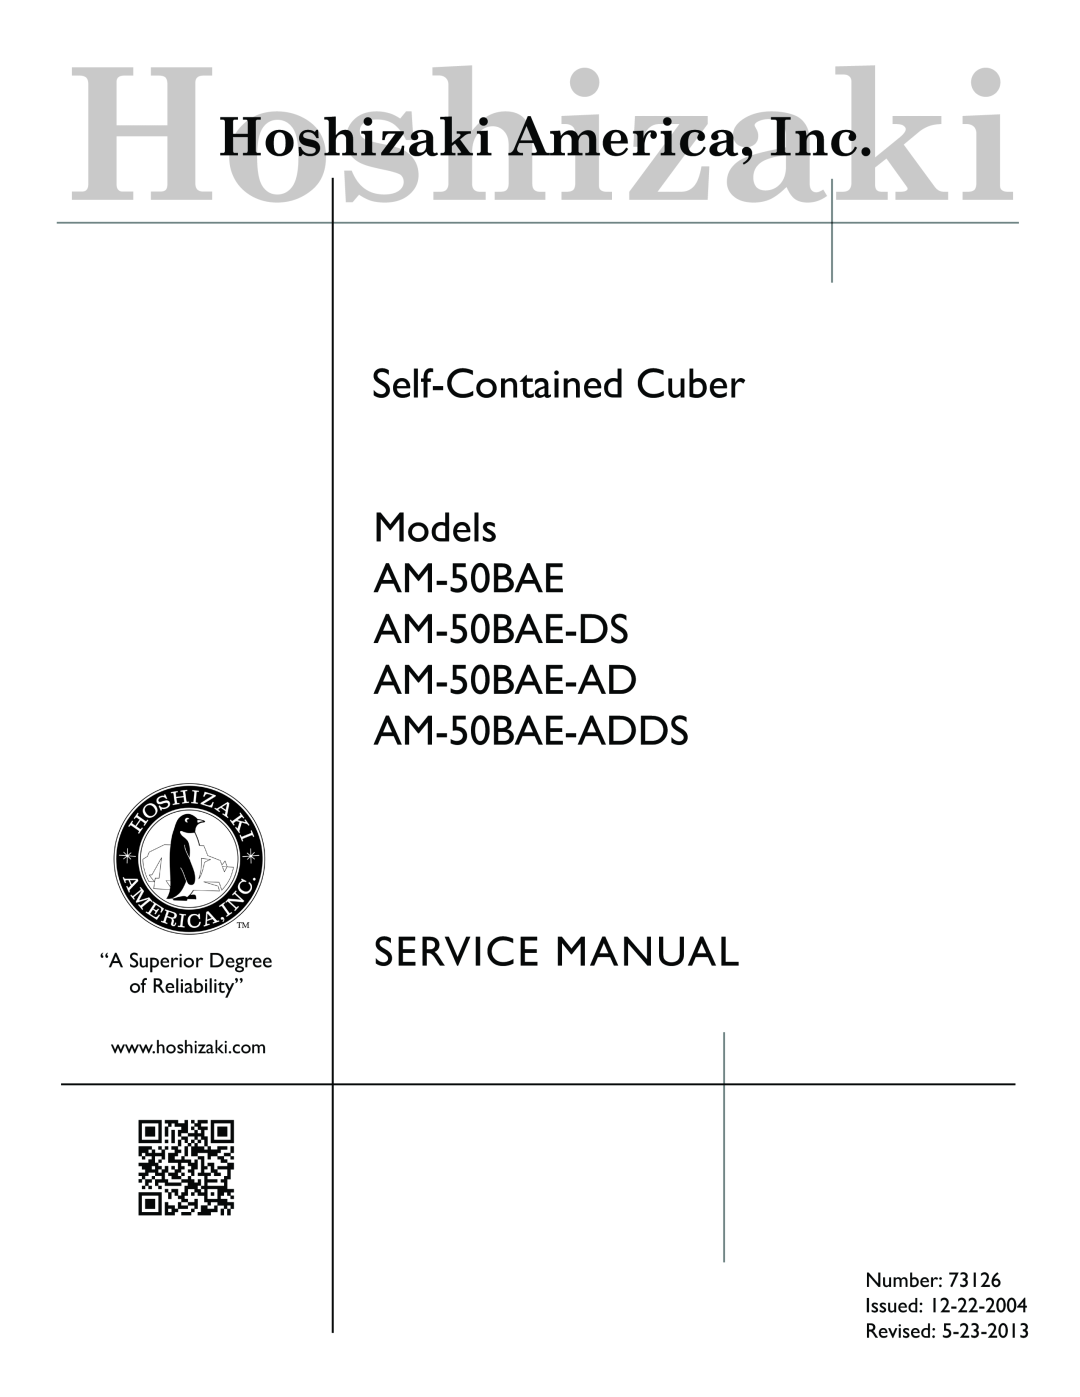 Hoshizaki manual Self-ContainedCubelet Models AM-50BAE AM-50BAE-DS, AM-50BAE-AD AM-50BAE-ADDS PARTS LIST 